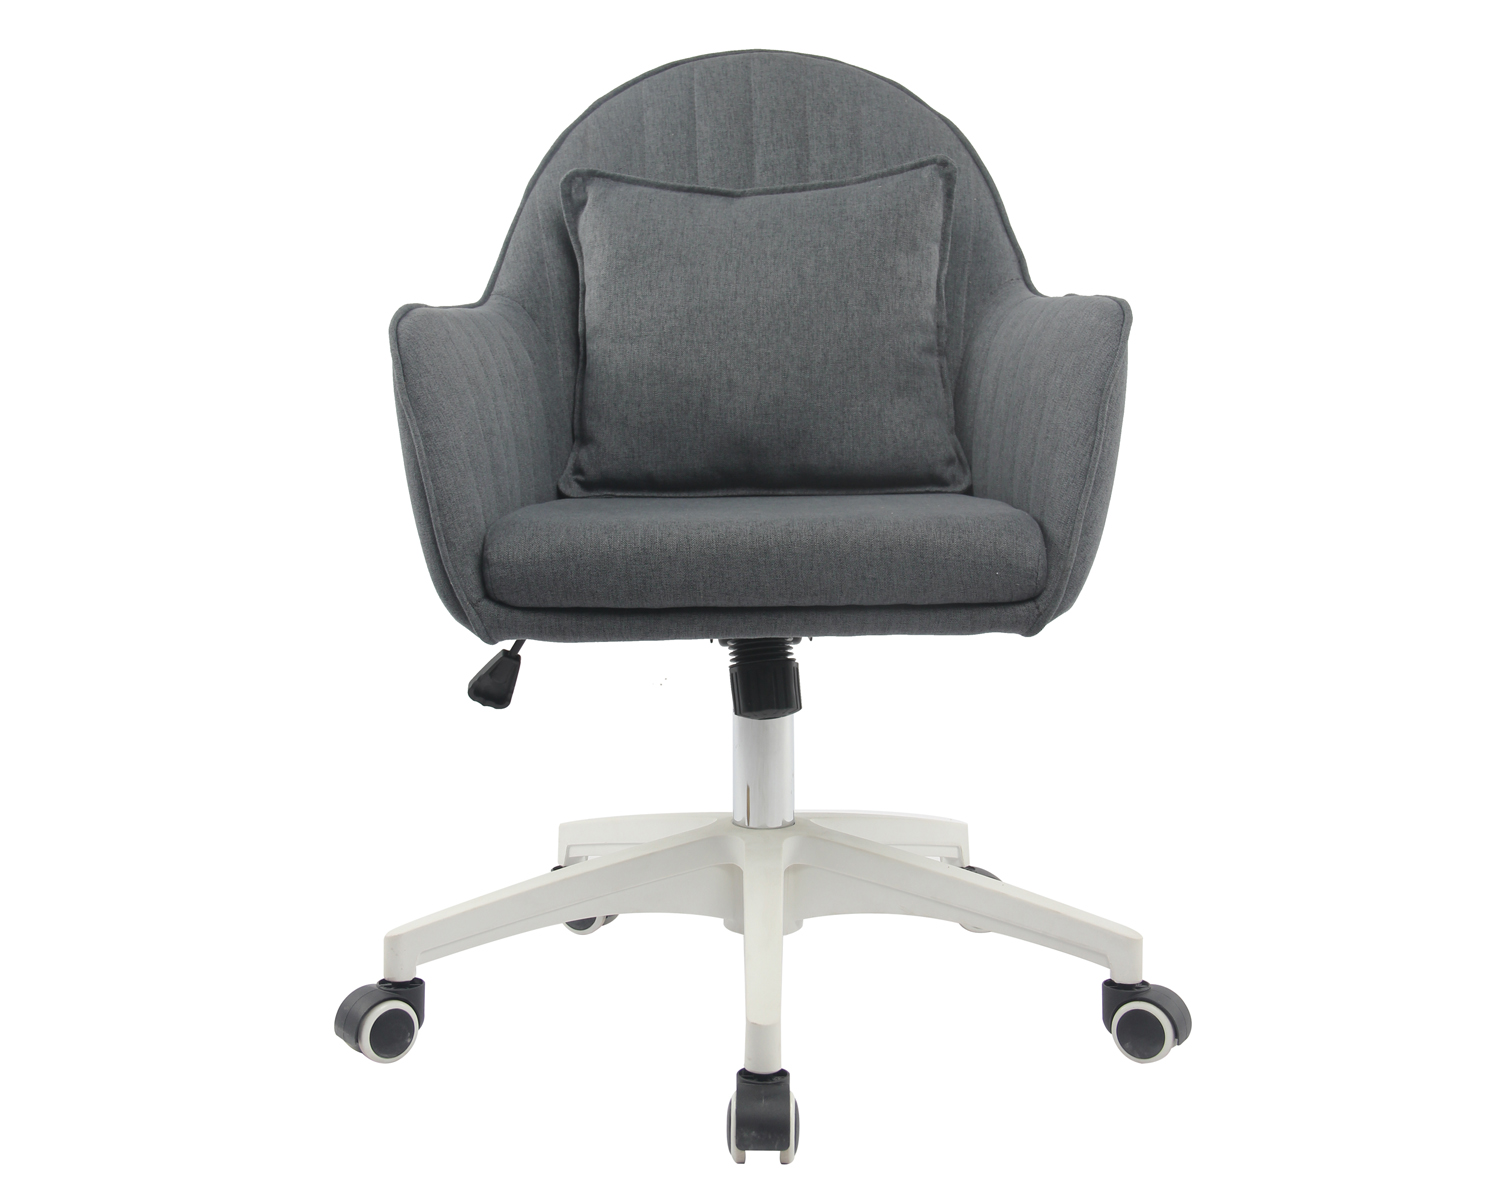 Silla de oficina en casa con buena espuma, silla decorativa de escritorio ajustable en altura con base negra mate, tela de sarga, gris claro